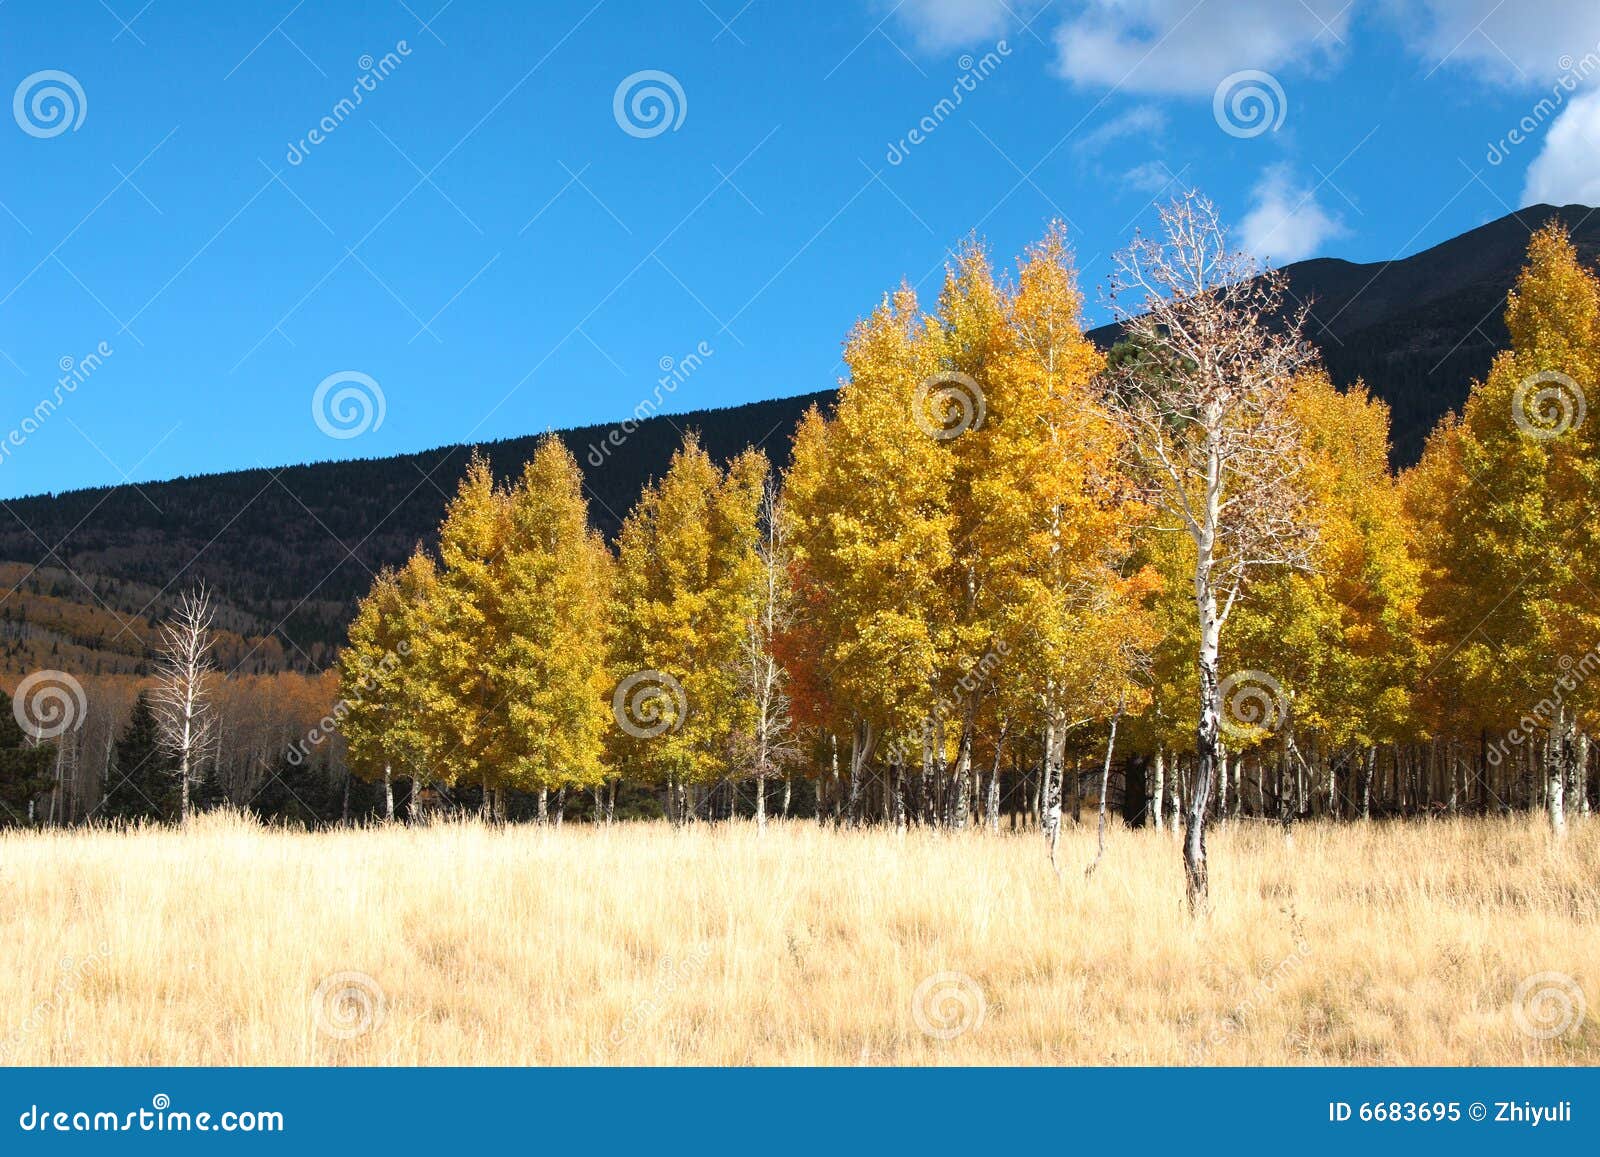 fall color flagstaff arizona